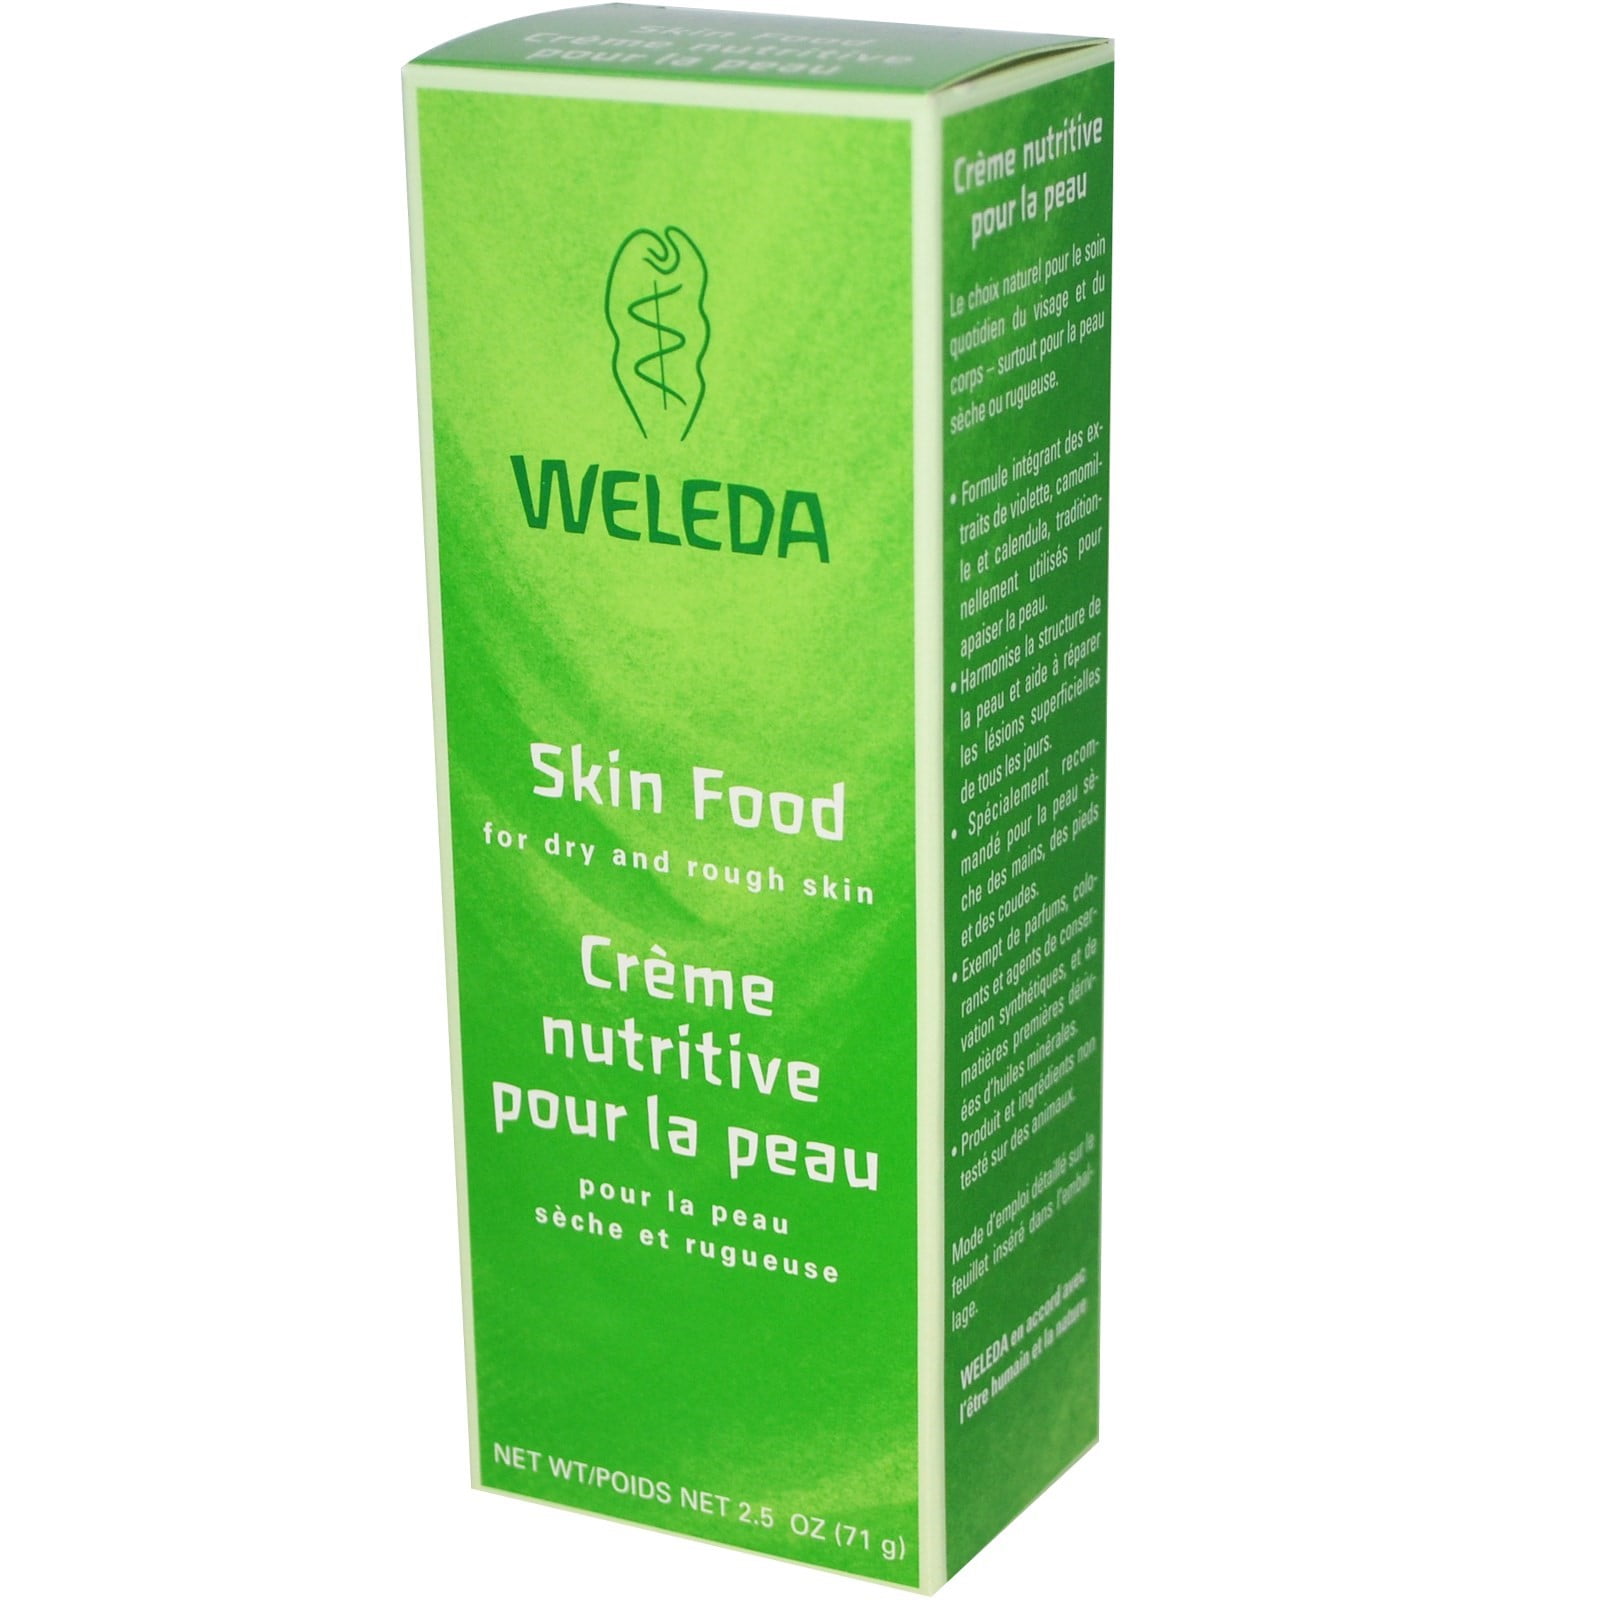 Weleda Skin Food, Original Ultra-Rich Cream, 2.5 oz 